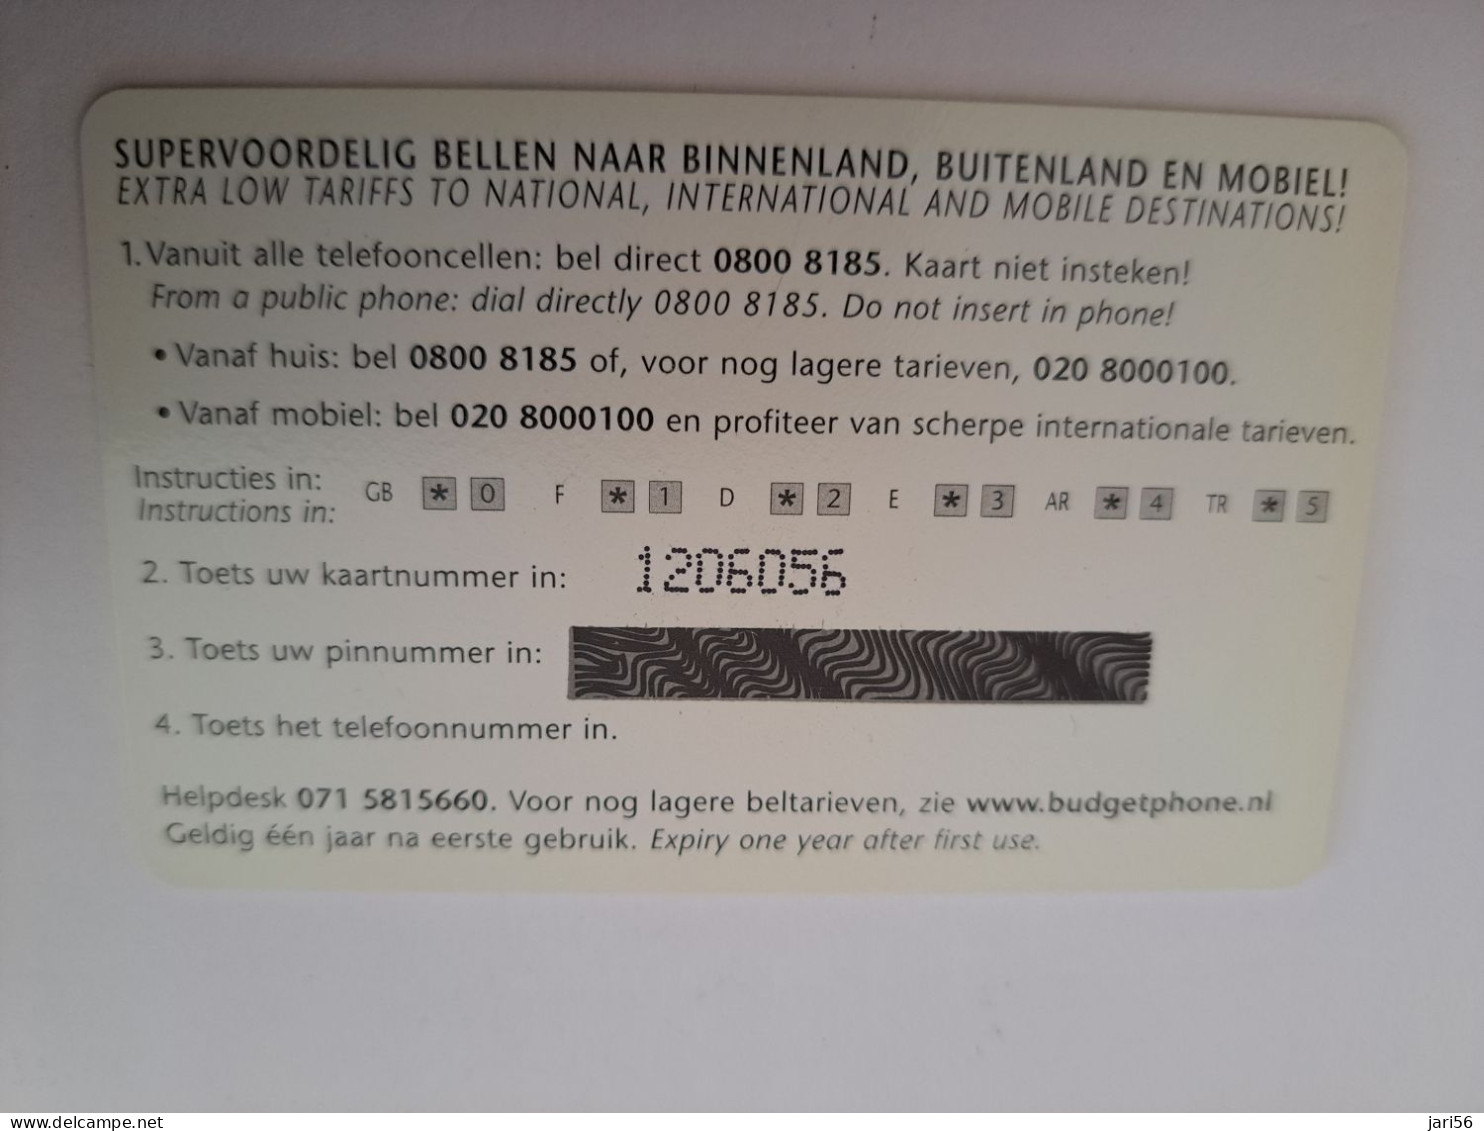 NETHERLANDS /  PREPAID/ NTC CLUB/ MEMBERCARD / EURO COIN ON CARD /  €  1,-   - MINT  CARD  ** 14867** - Openbaar